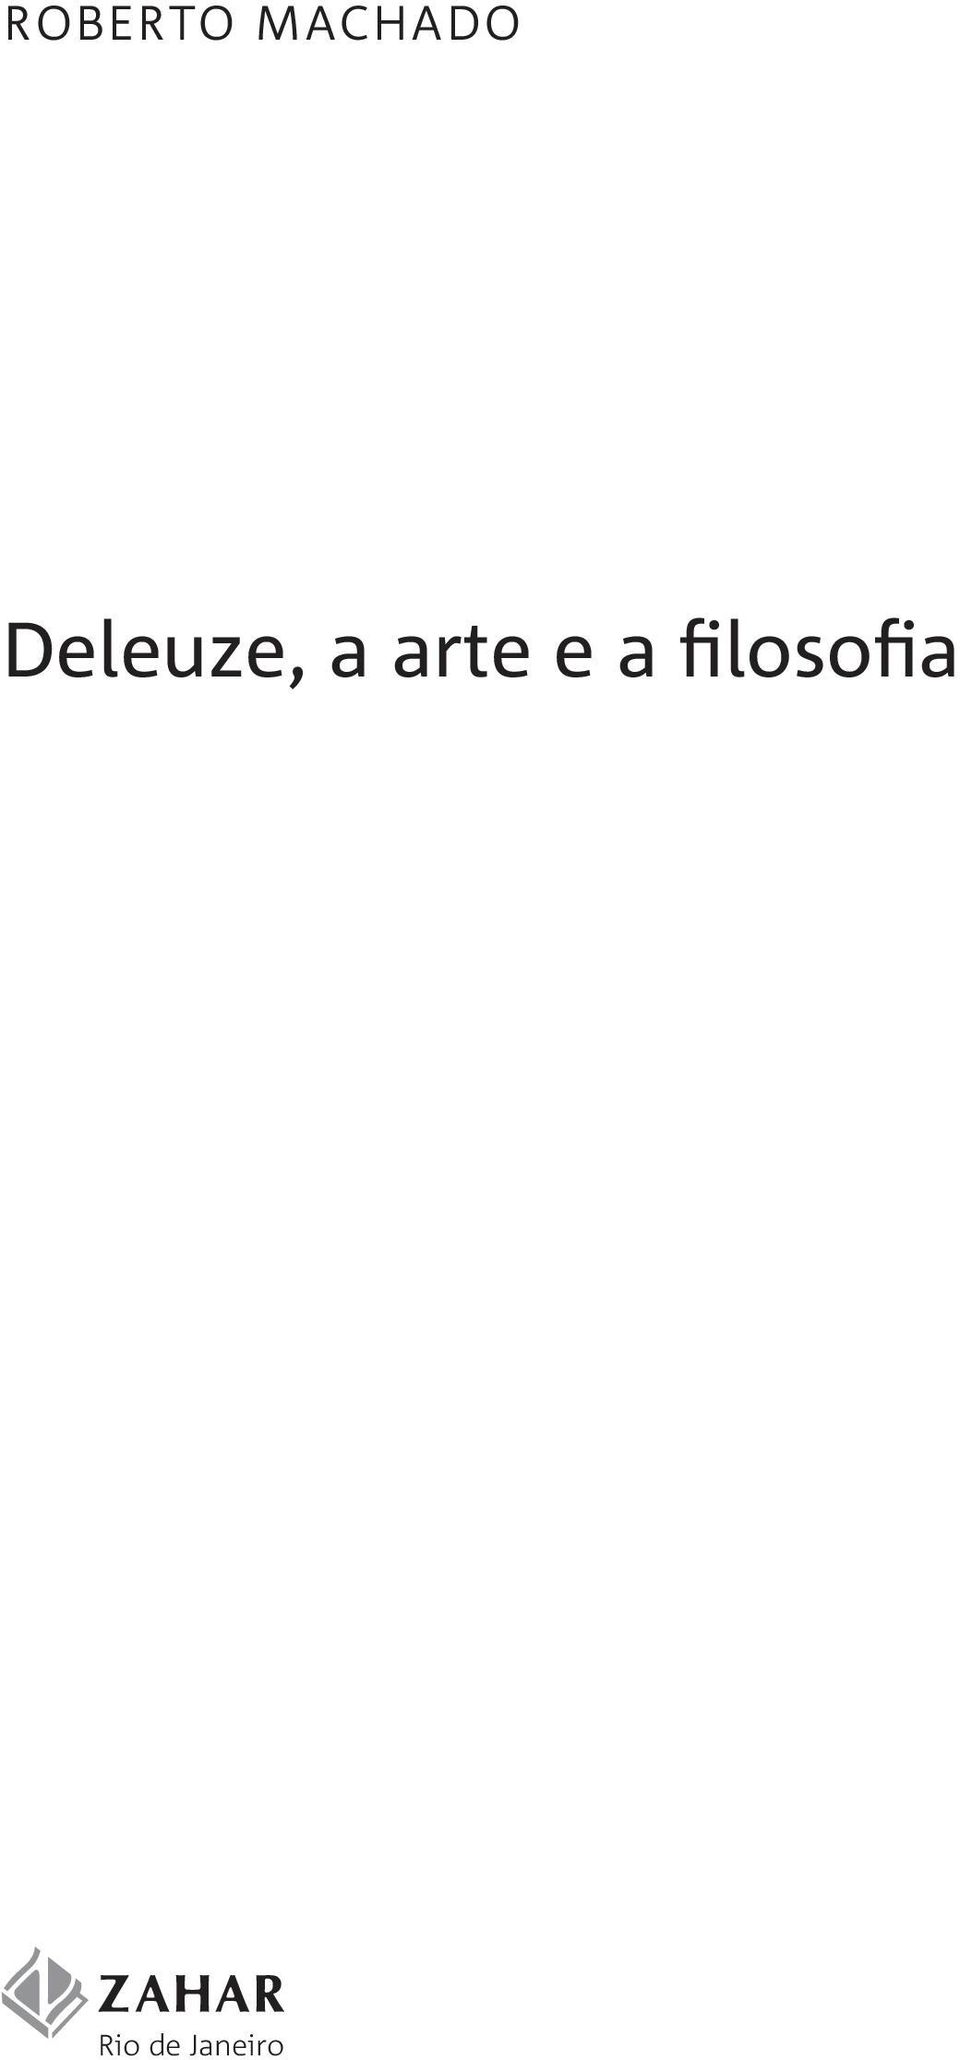 Deleuze, a